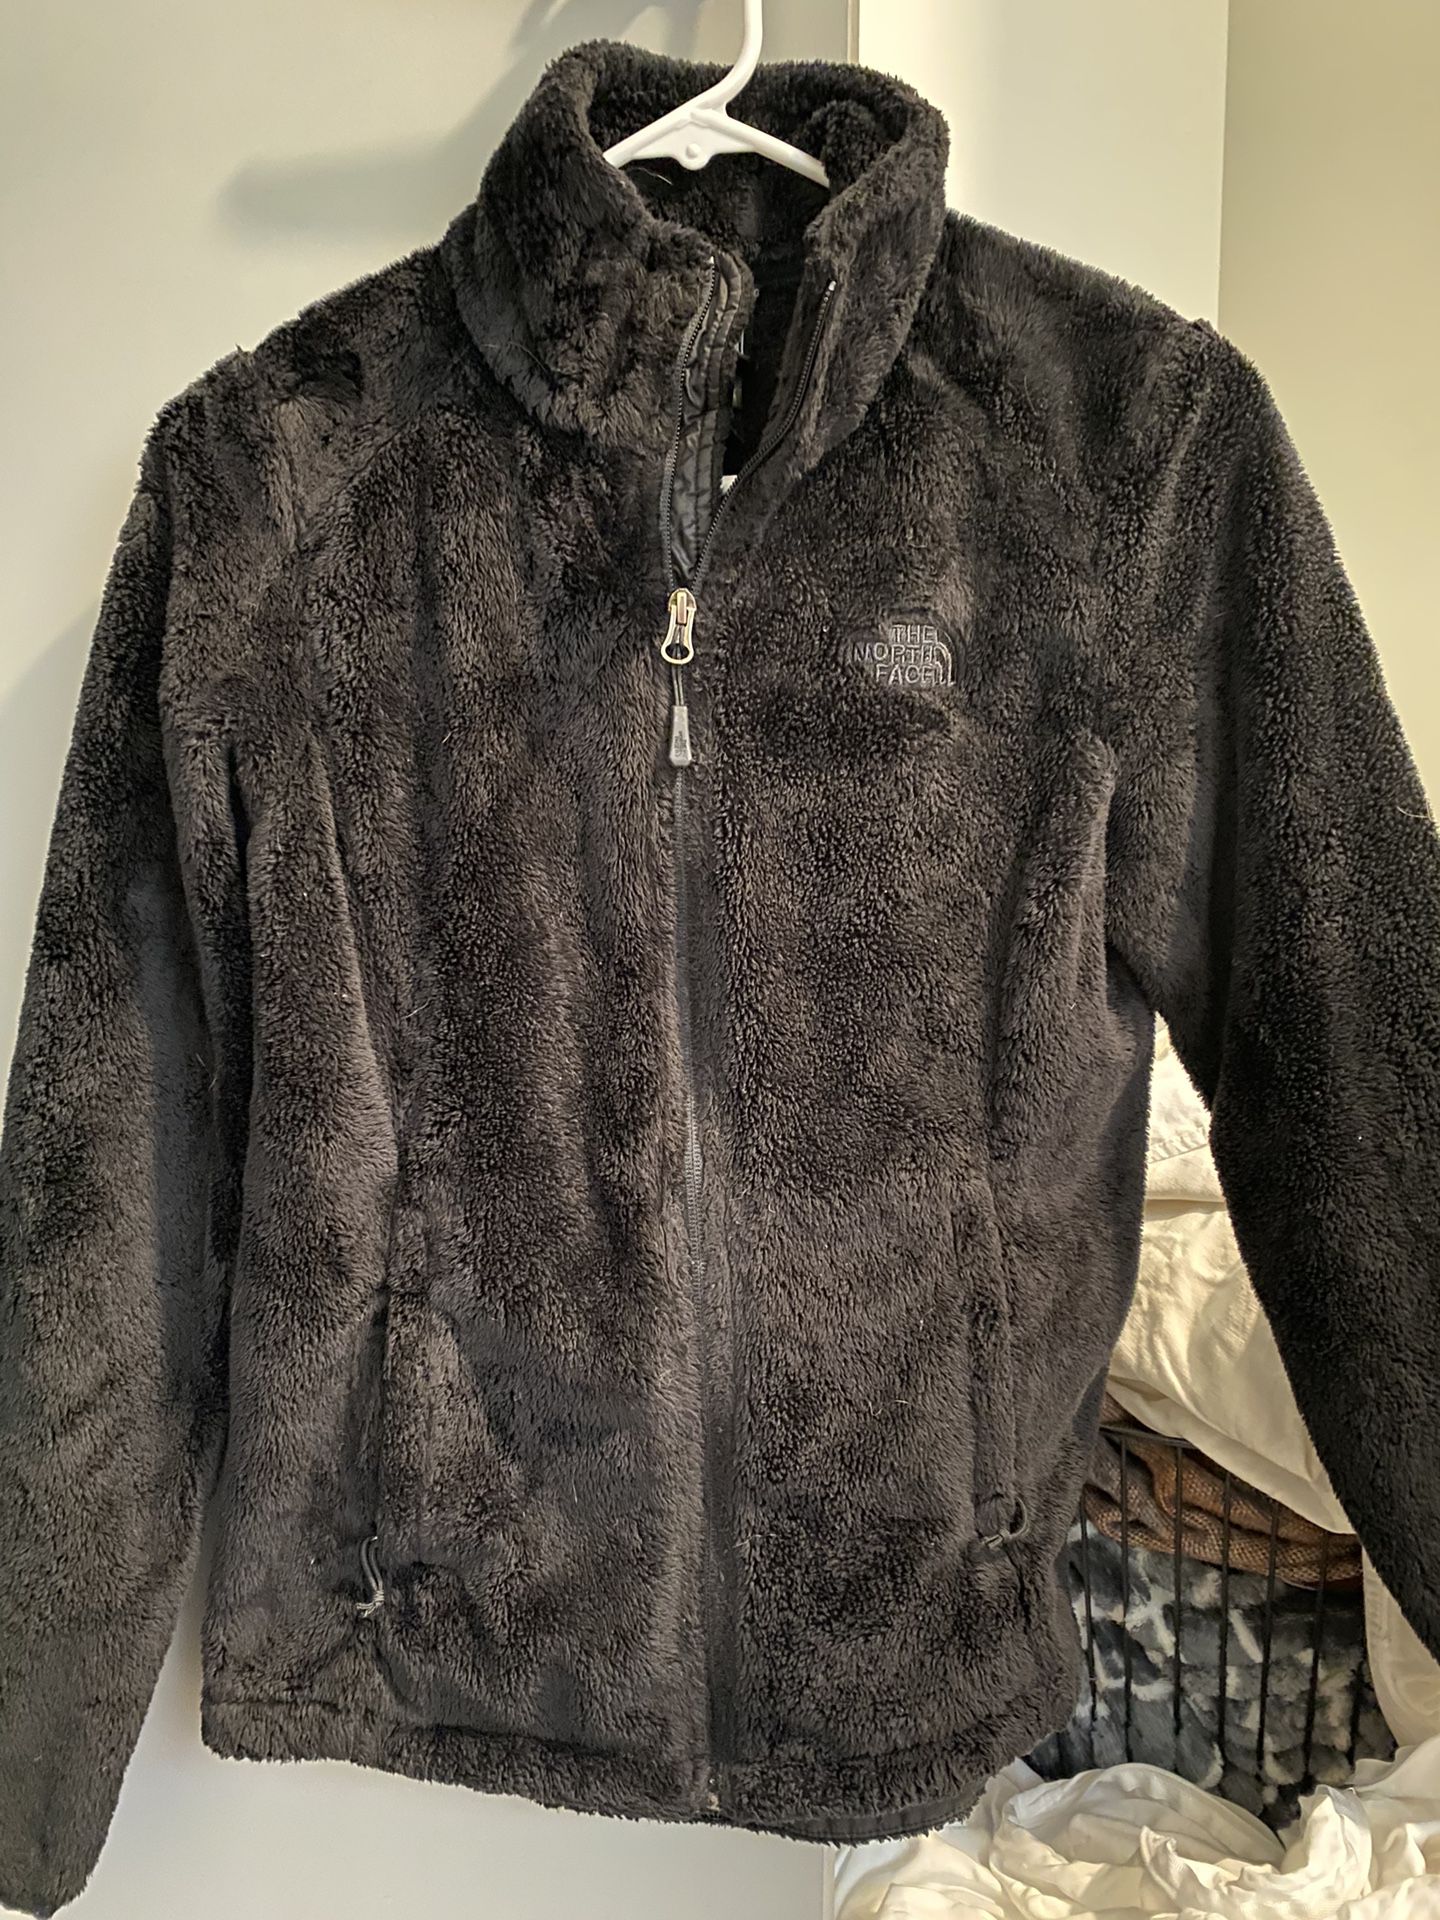 The North Face Women's Osito Fleece Jacket